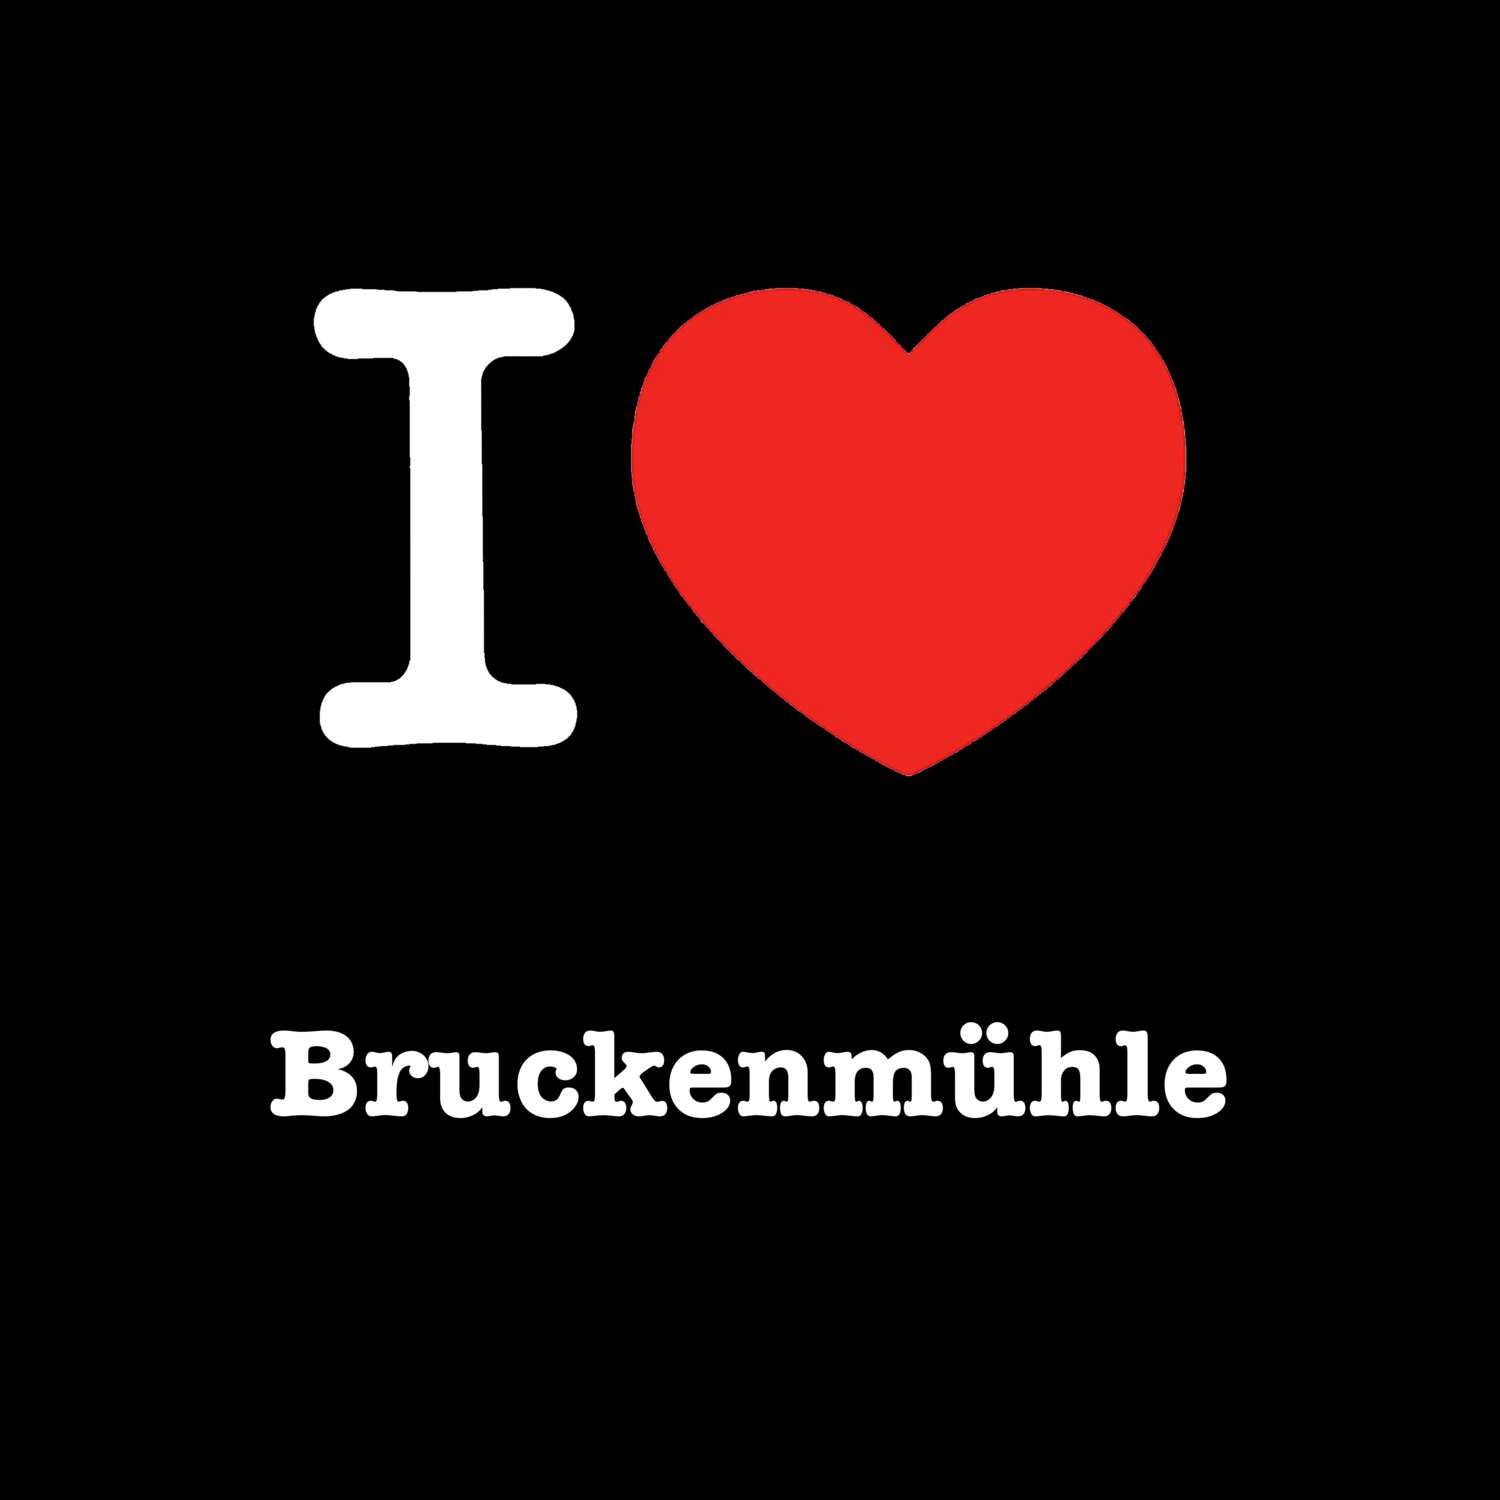 Bruckenmühle T-Shirt »I love«